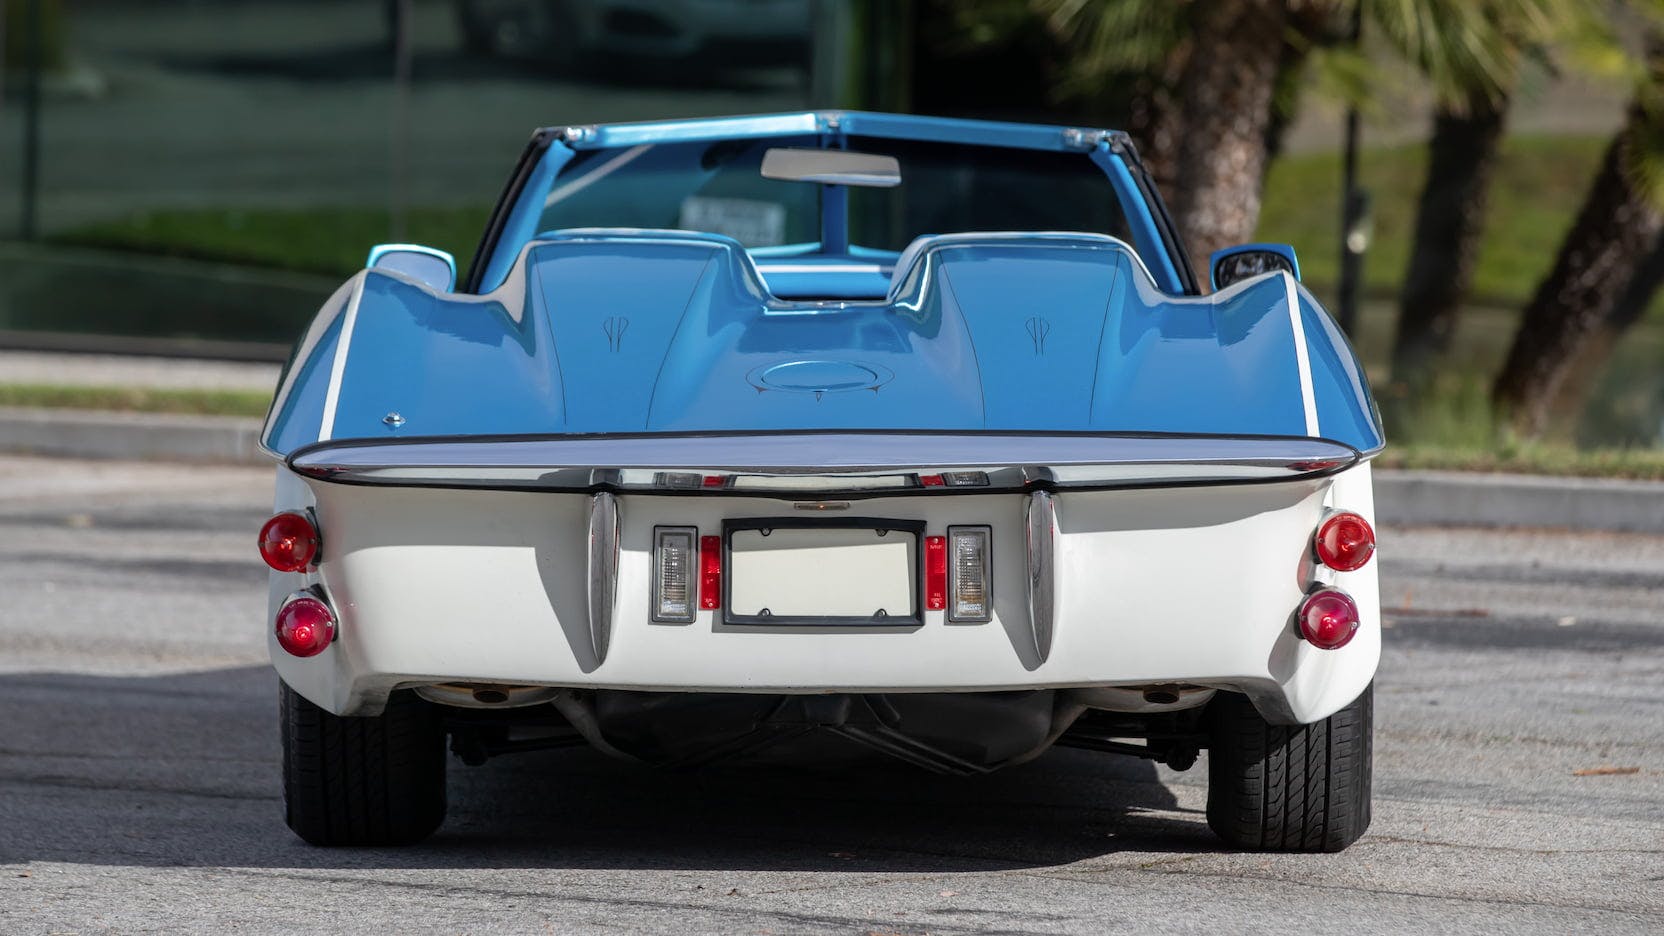 1969 Barrister Corvette Barris custom convertible rear